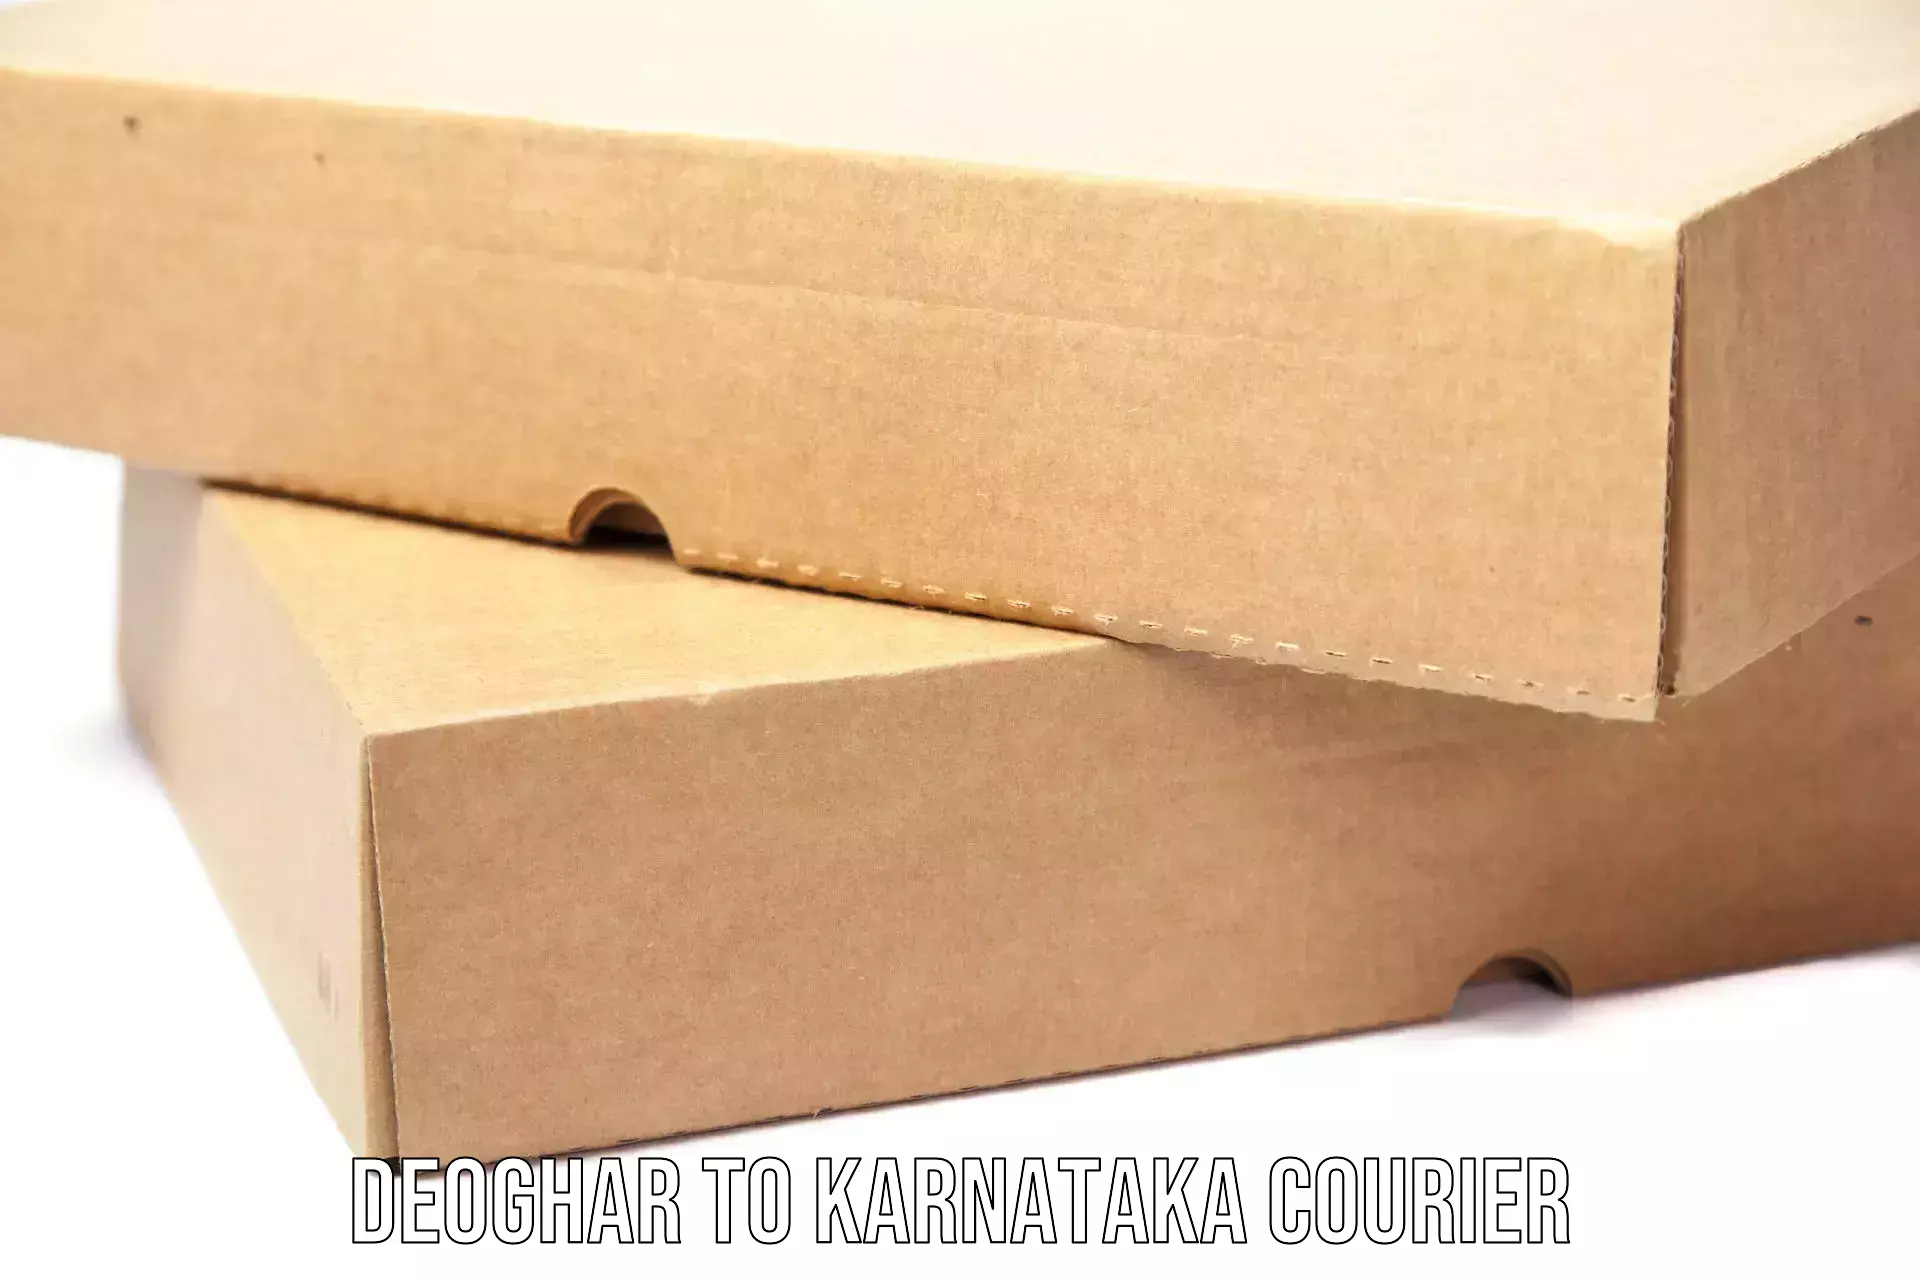 High-speed parcel service Deoghar to Karnataka